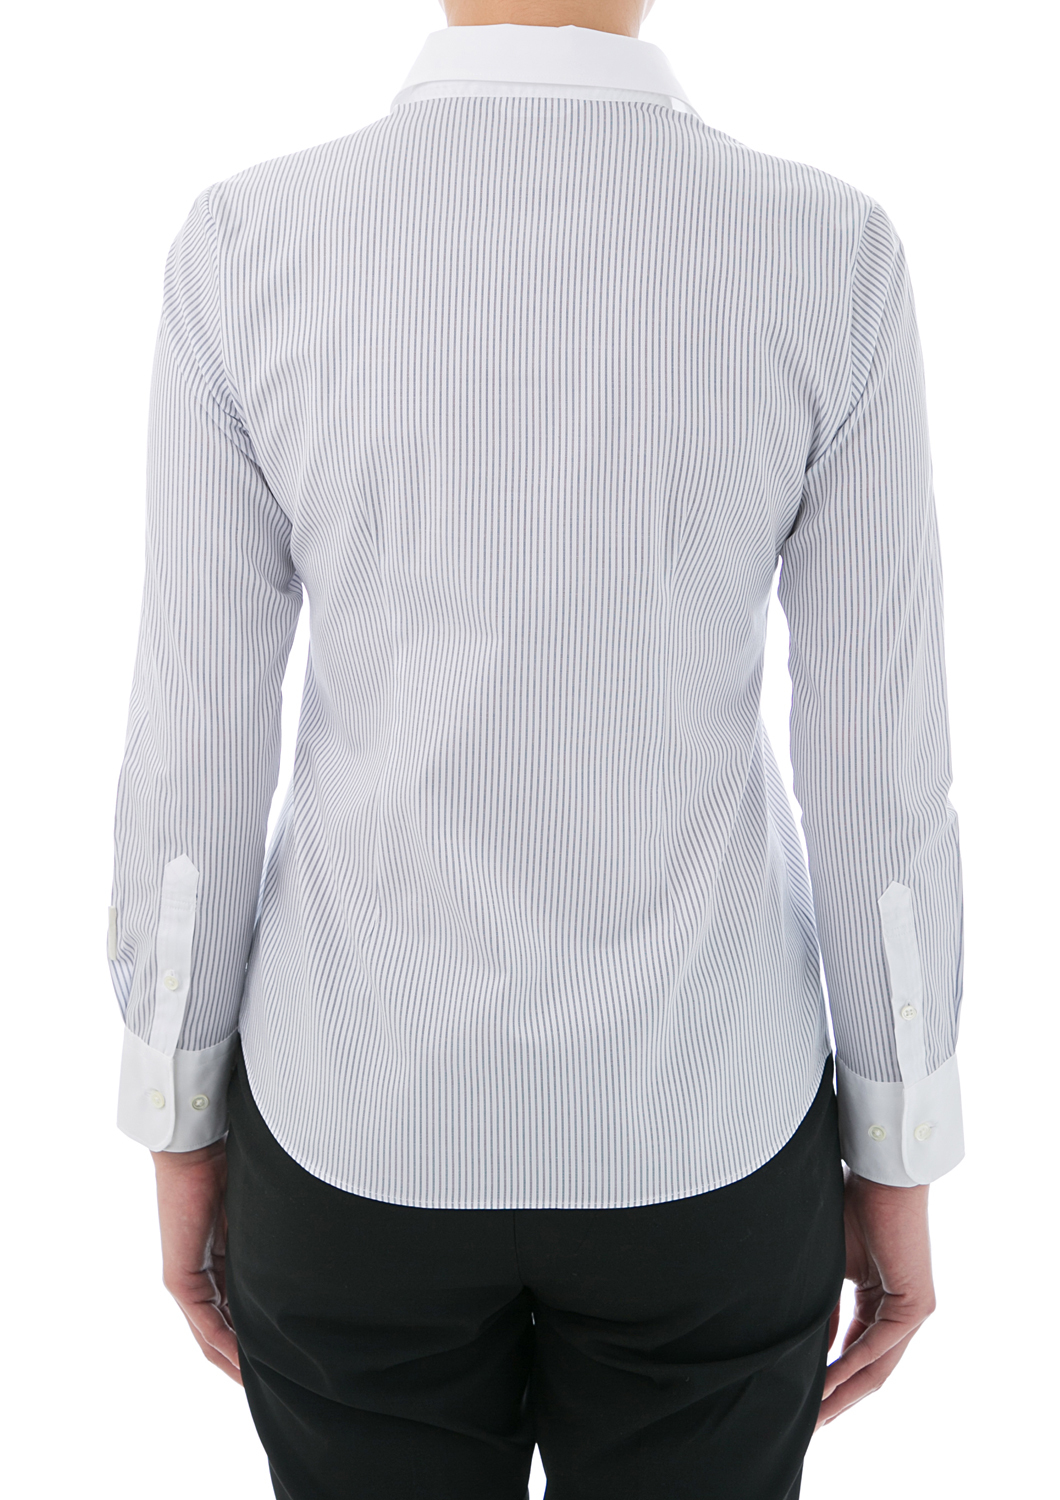 100% Cotton Wrinkle-free White Collared Dress Shirt